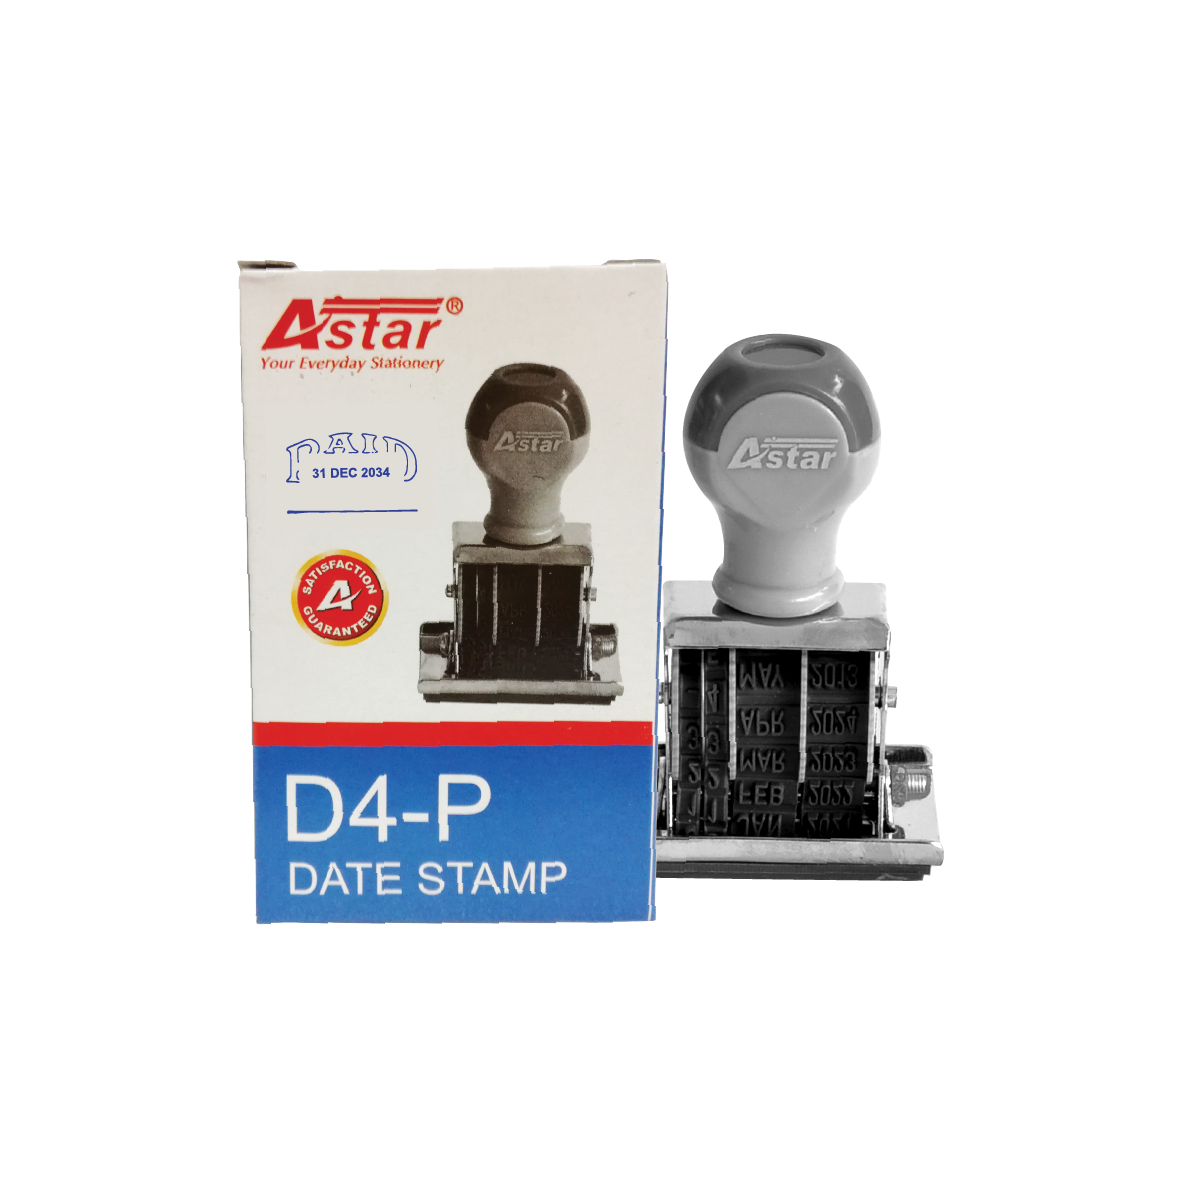 D4-P - ASTAR DATE STAMP